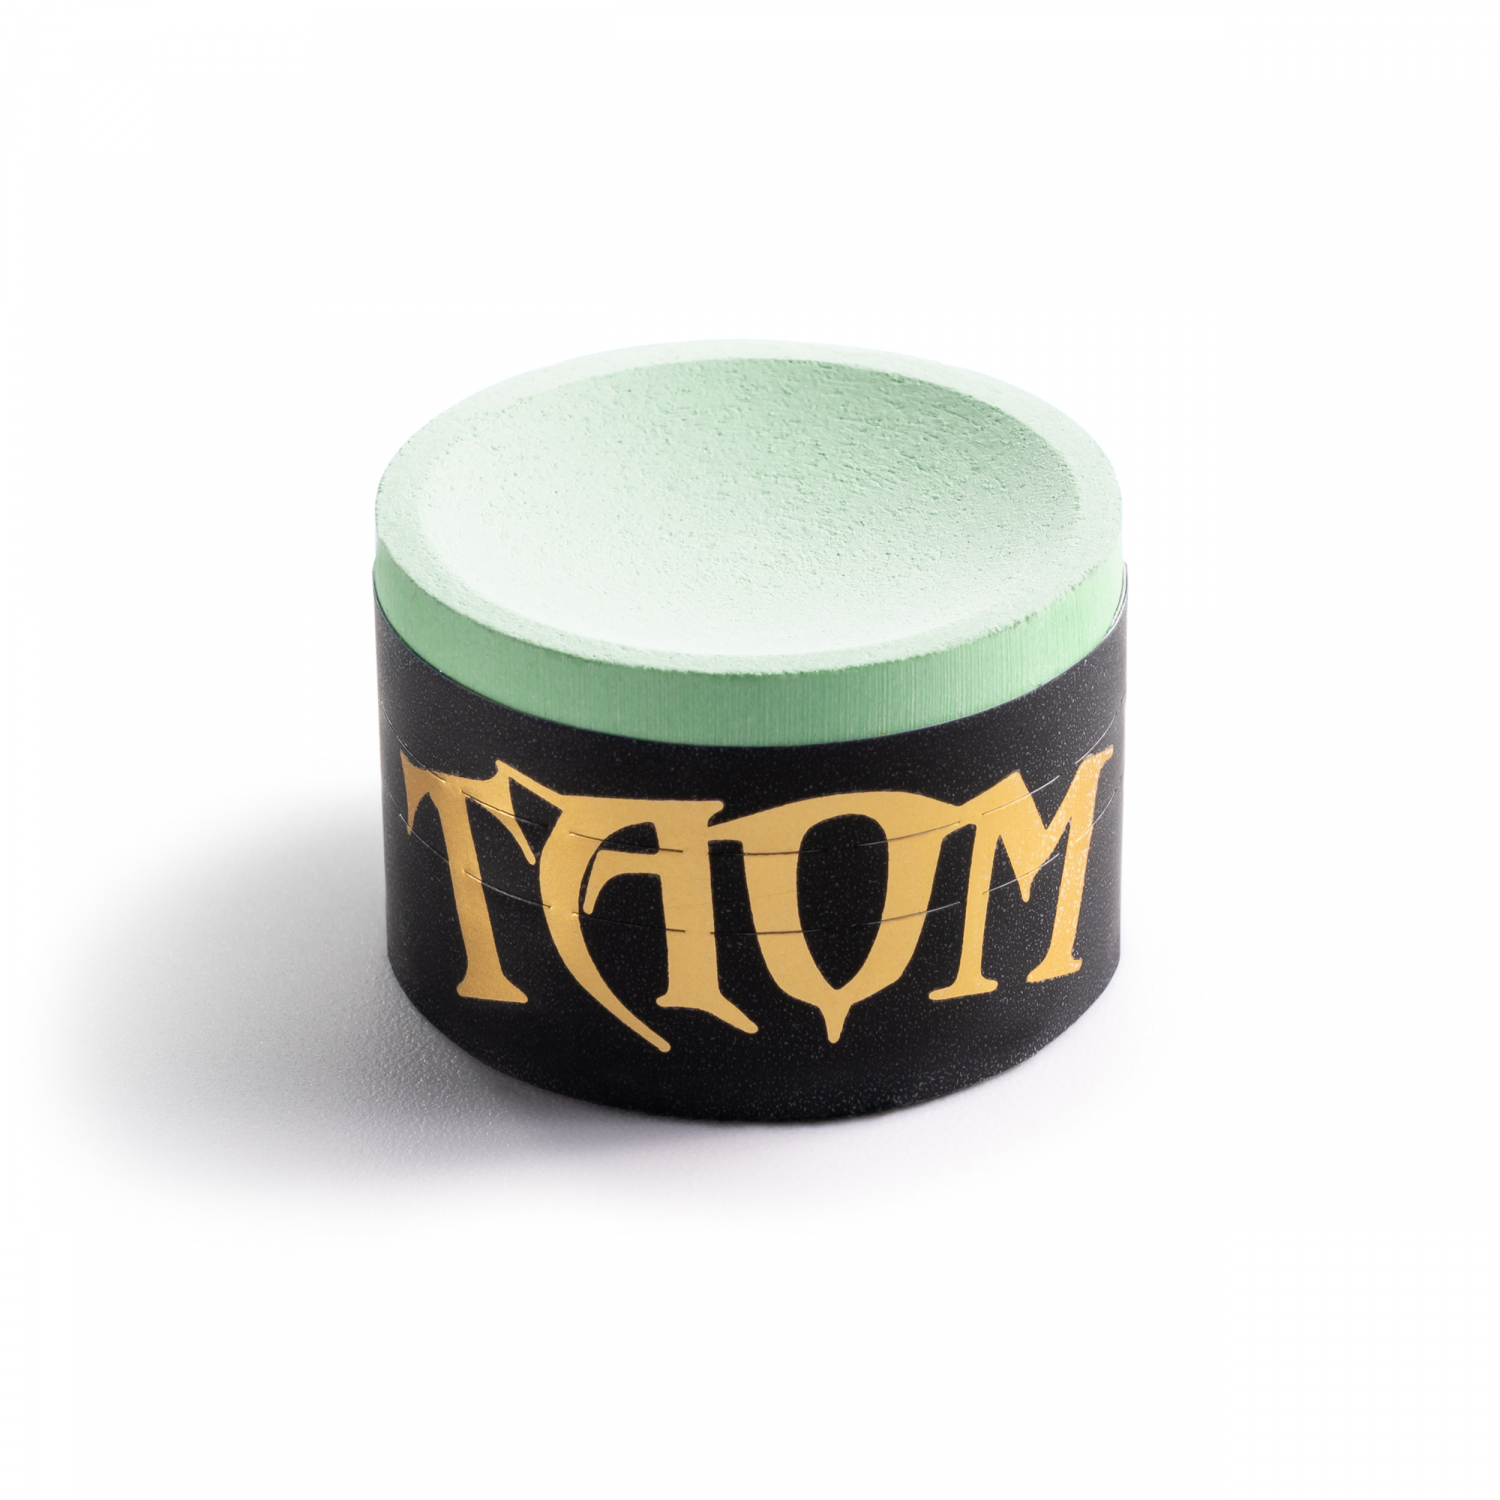 Taom /"Soft/" Gold Cue Chalk UK Supplier